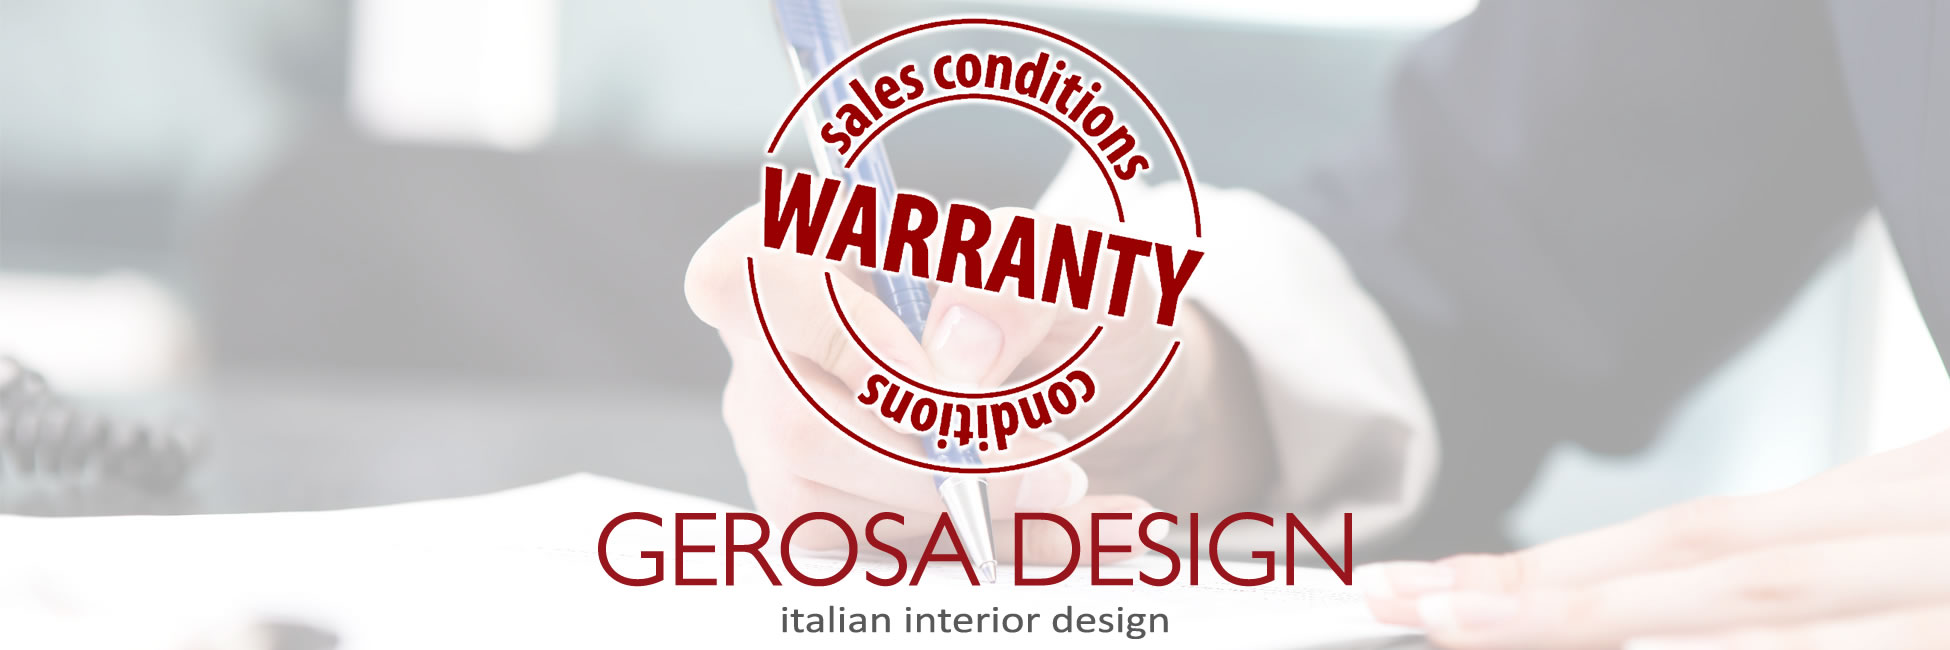 销售条件 - Gerosa Design